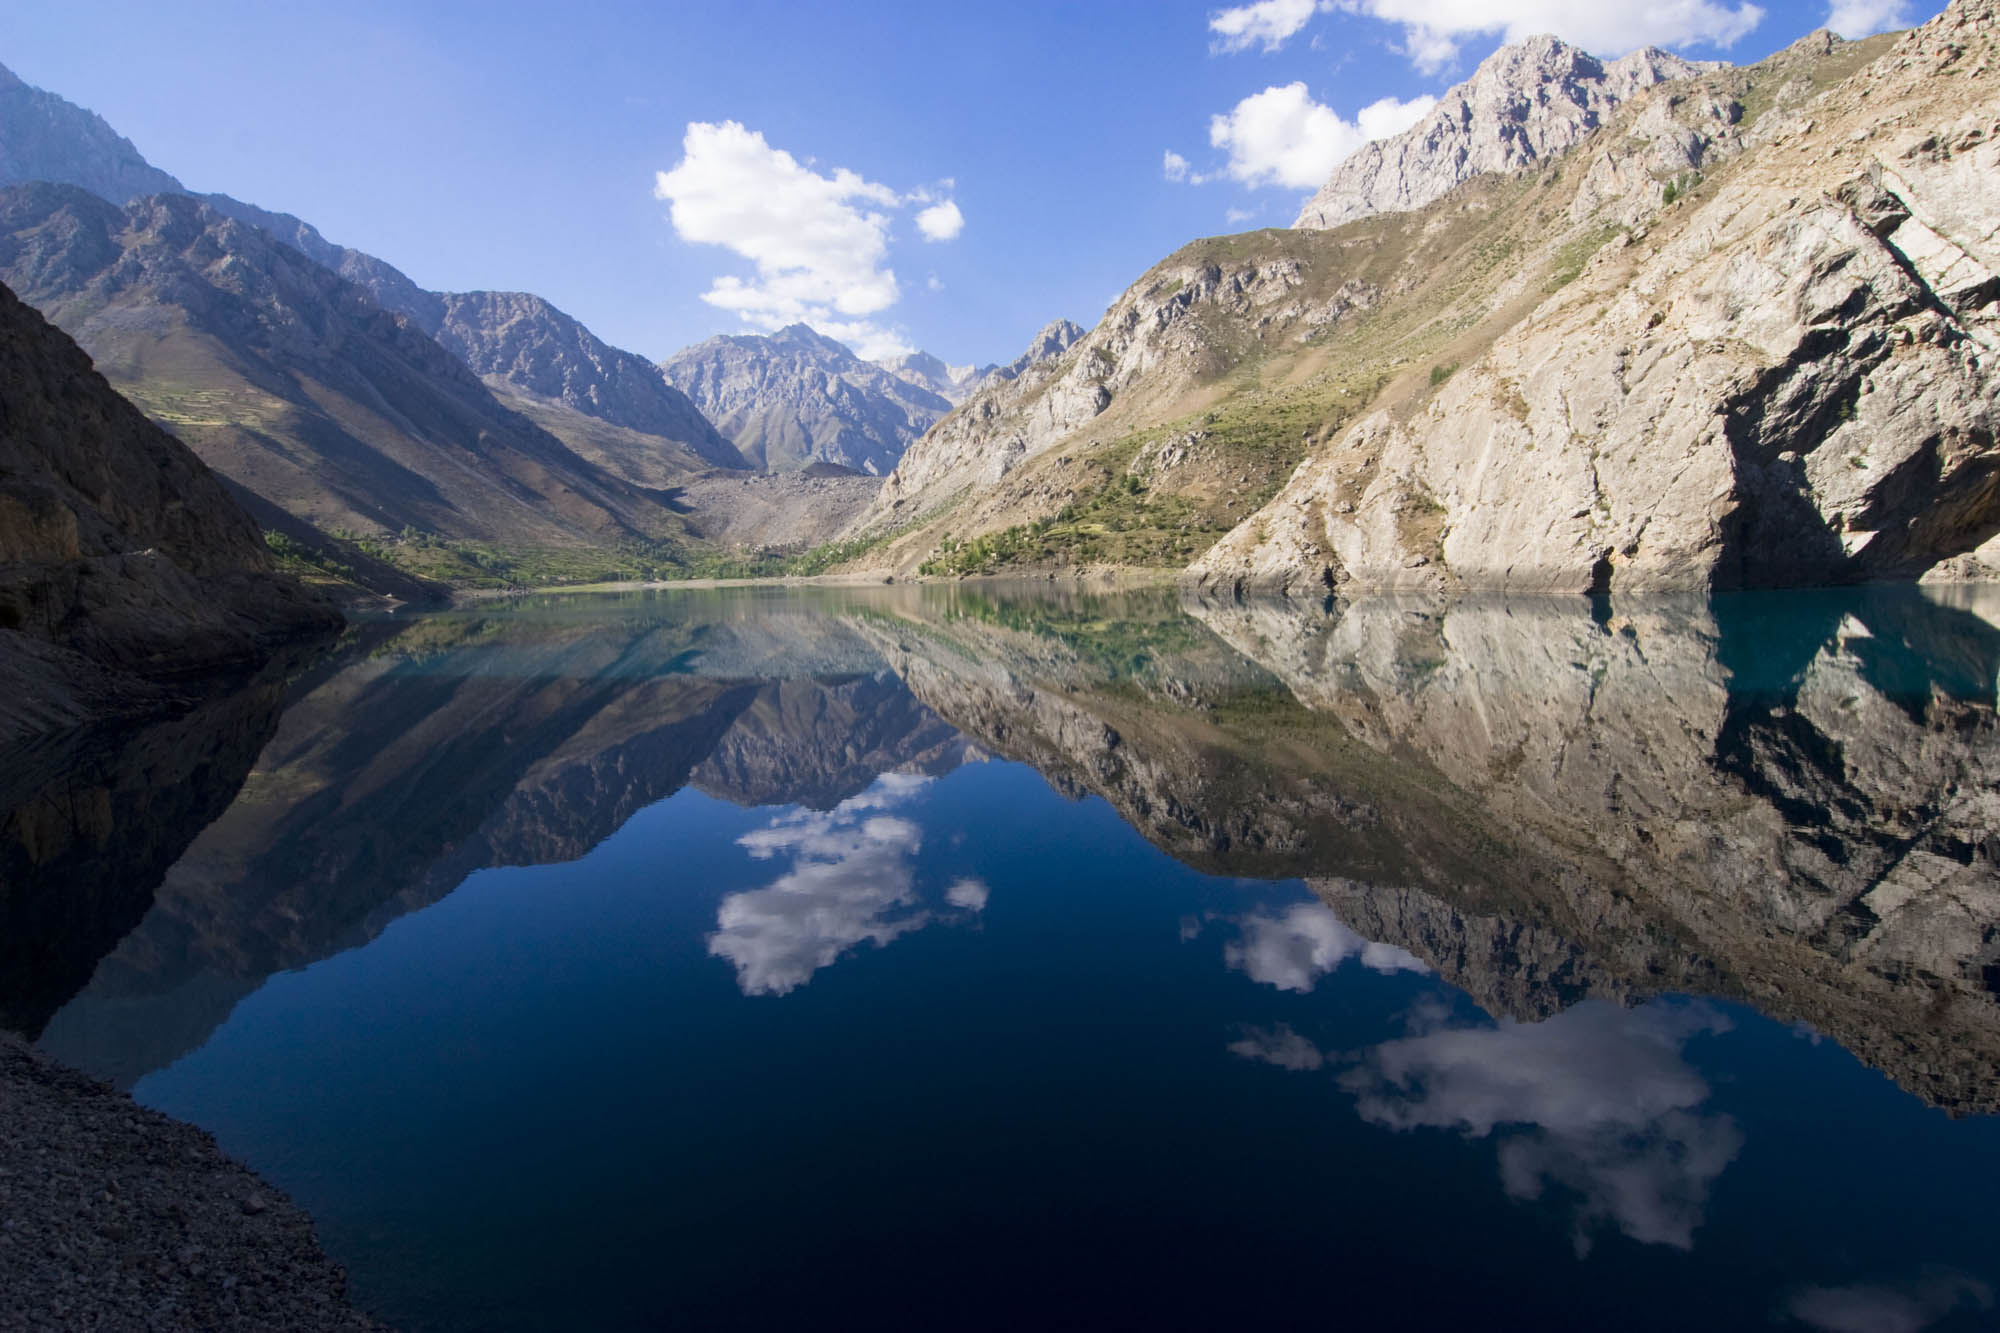 Haftkul lake in Zarafshan valley. Photographer: Nozim Qalandarov